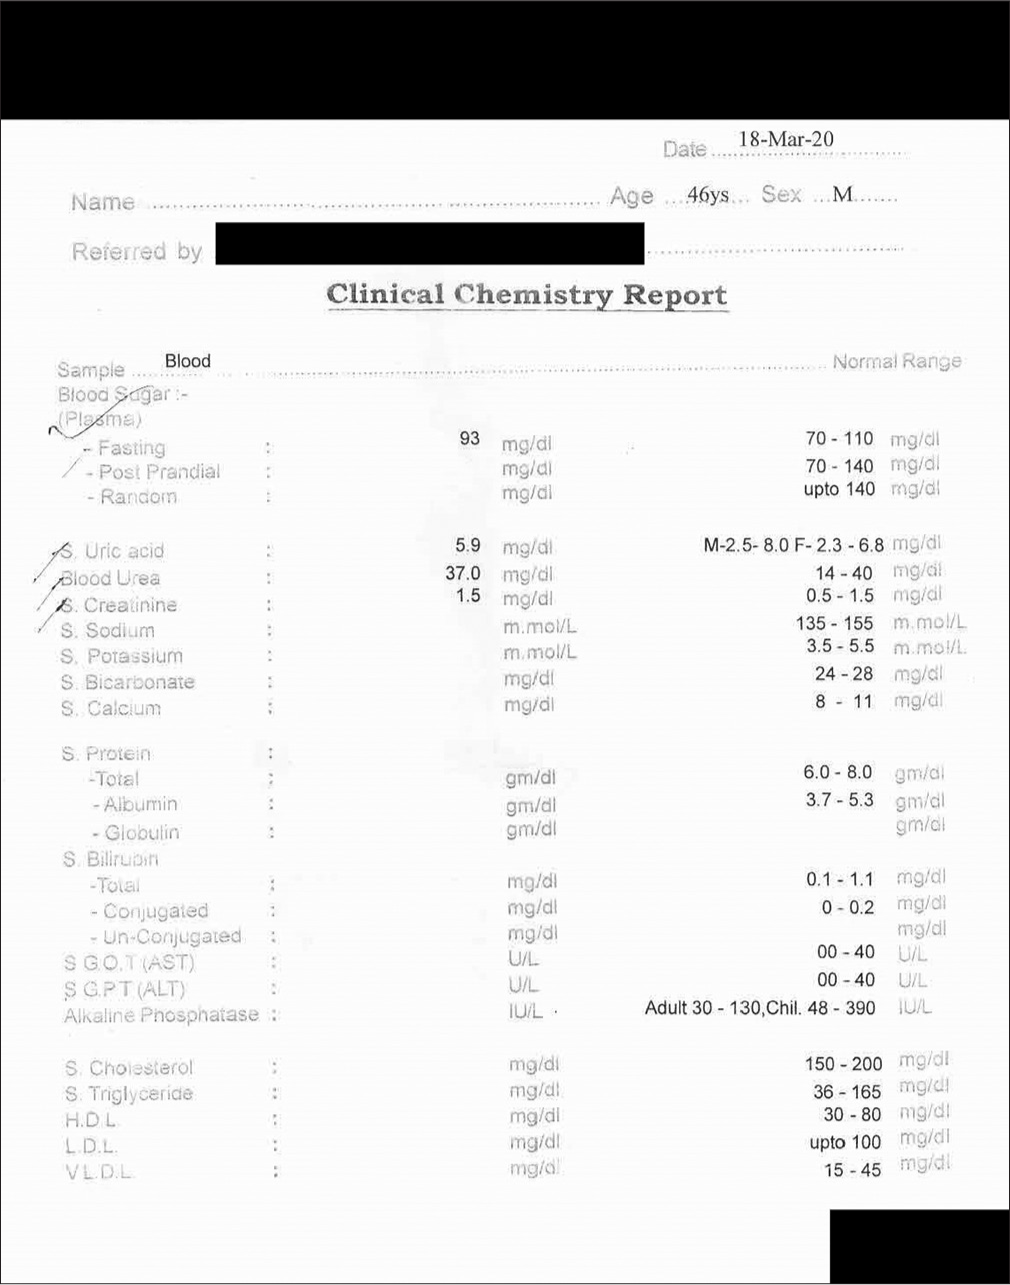 Blood examination report of case 1 on 18.03.2020. HDL: High-density lipoprotein, LDL: Low-density lipoprotein, VLDL: Very low-density lipoprotein, SGOT: Serum glutamicoxaloacetic transaminase, SGPT: Serum glutamic pyruvic transaminase.